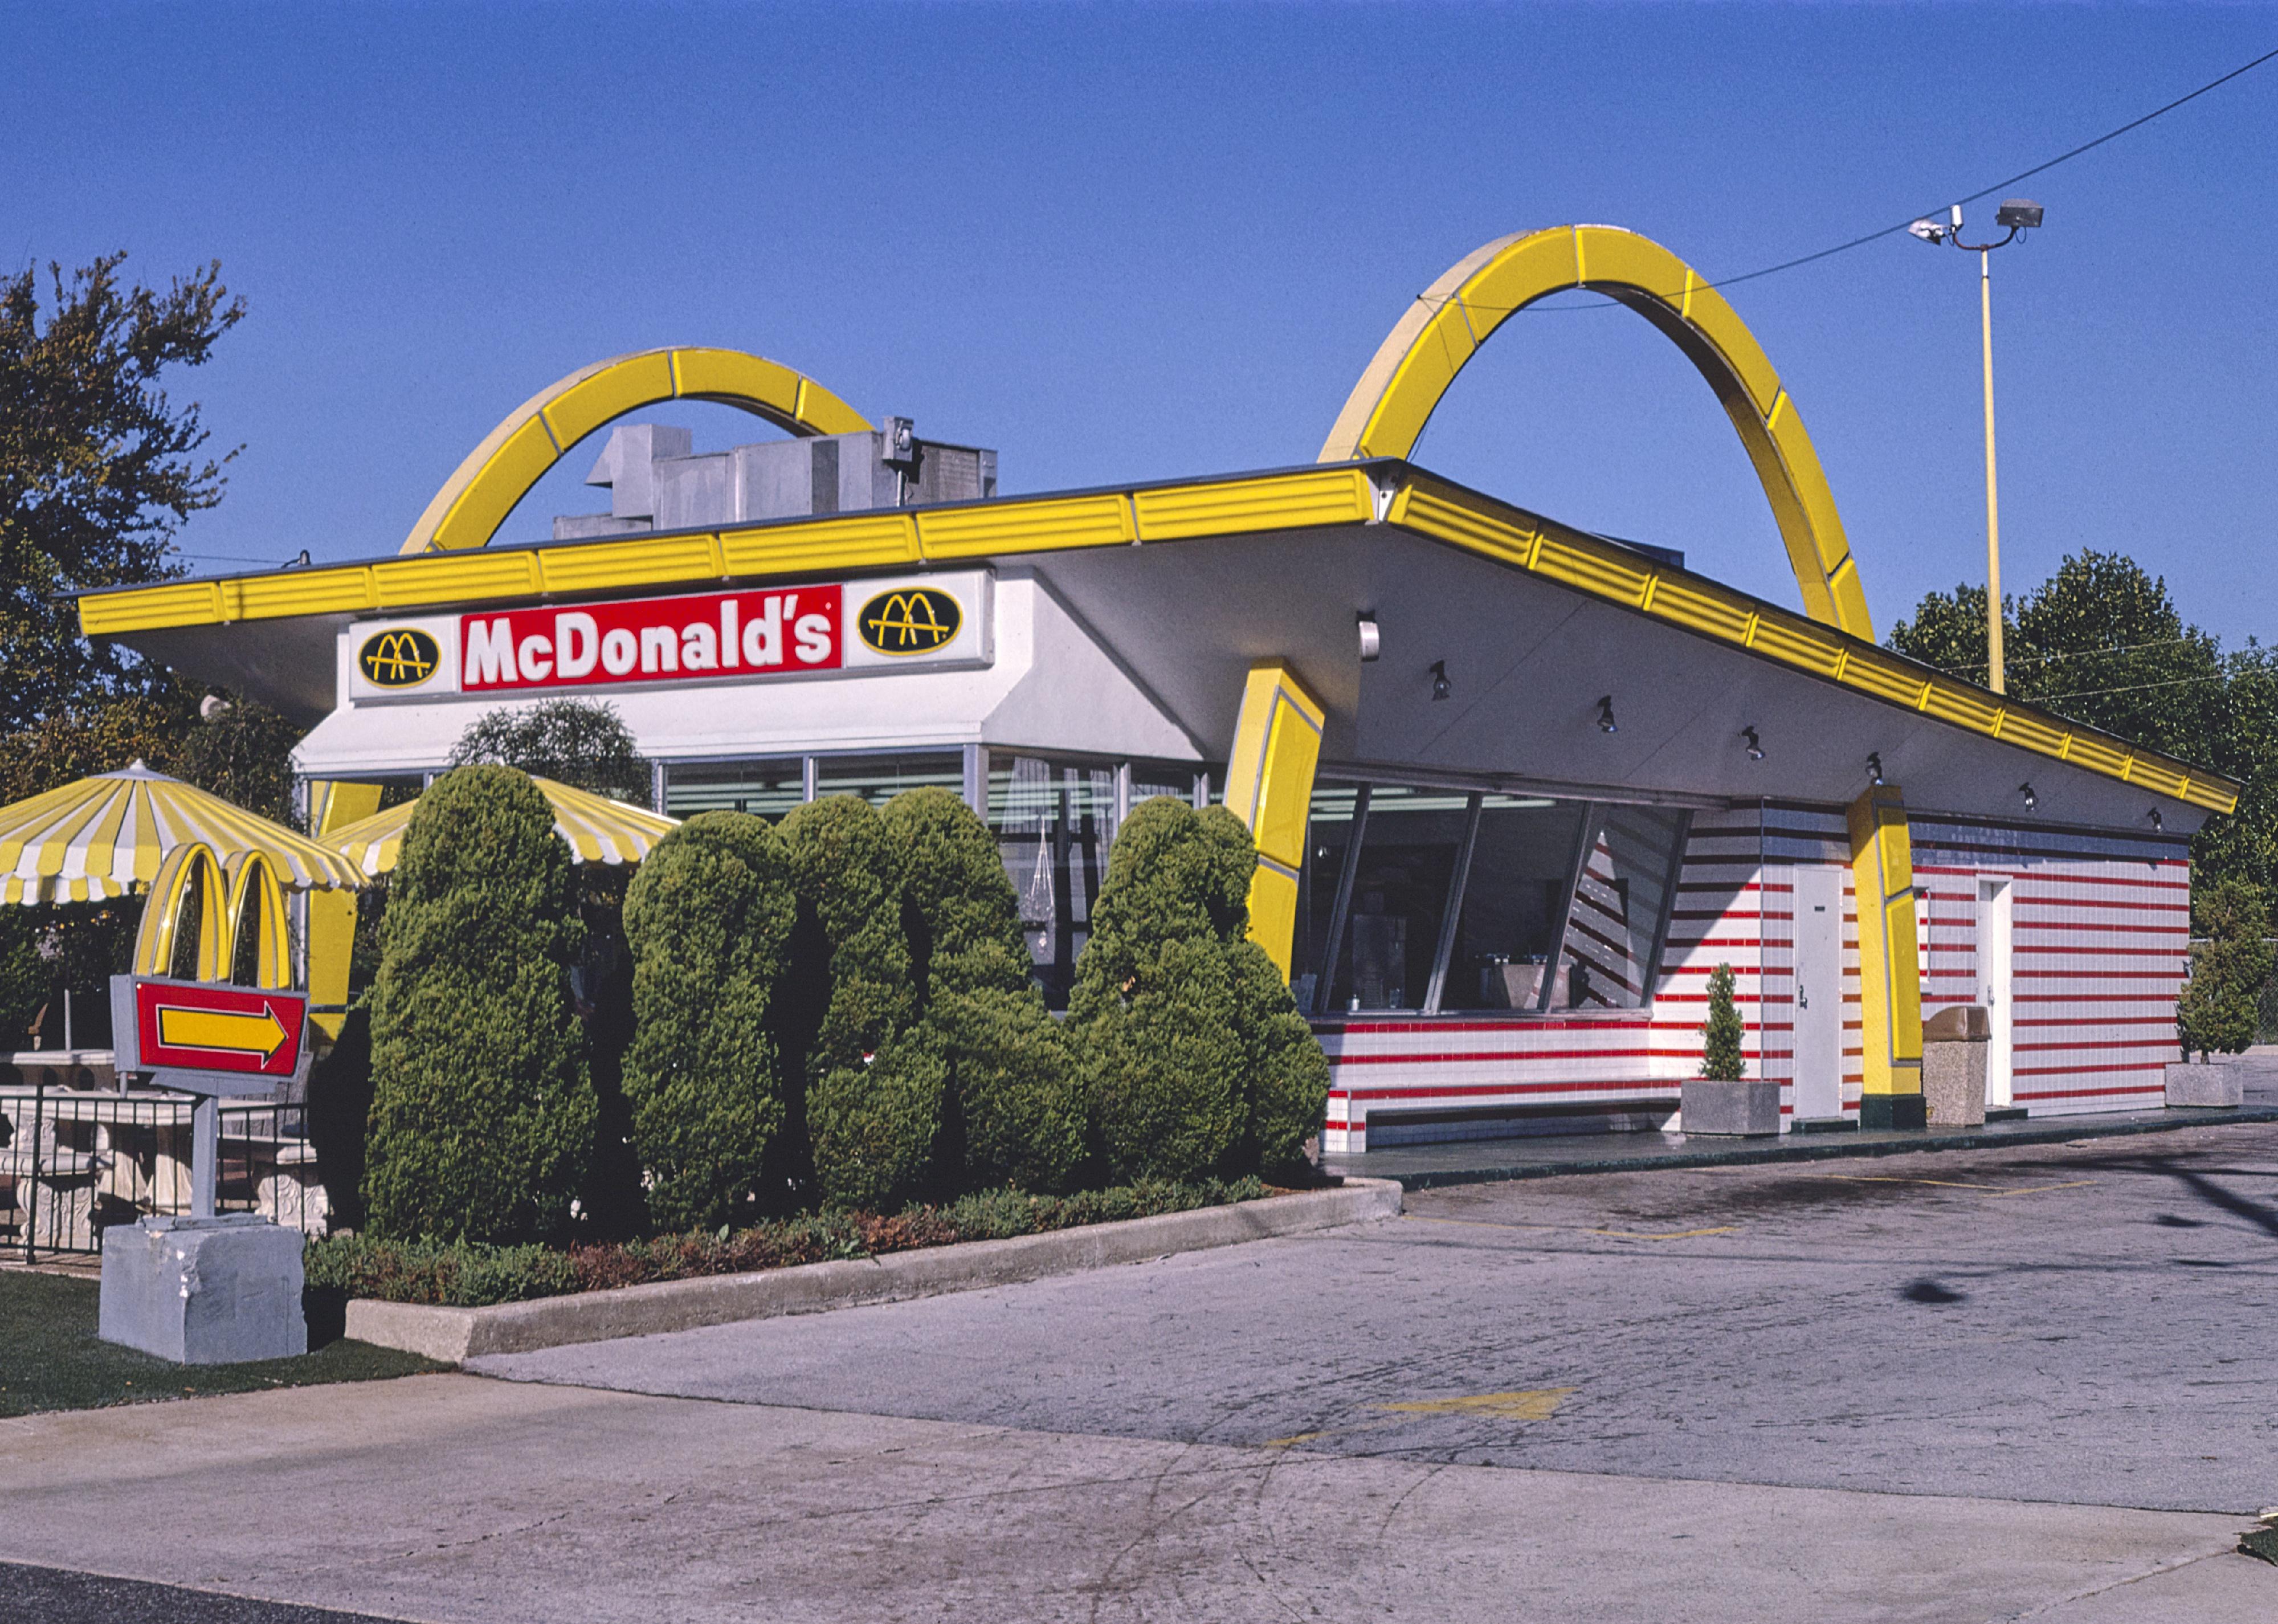 McDonald's in 1980 on Route 11, Birmingham, Alabama.